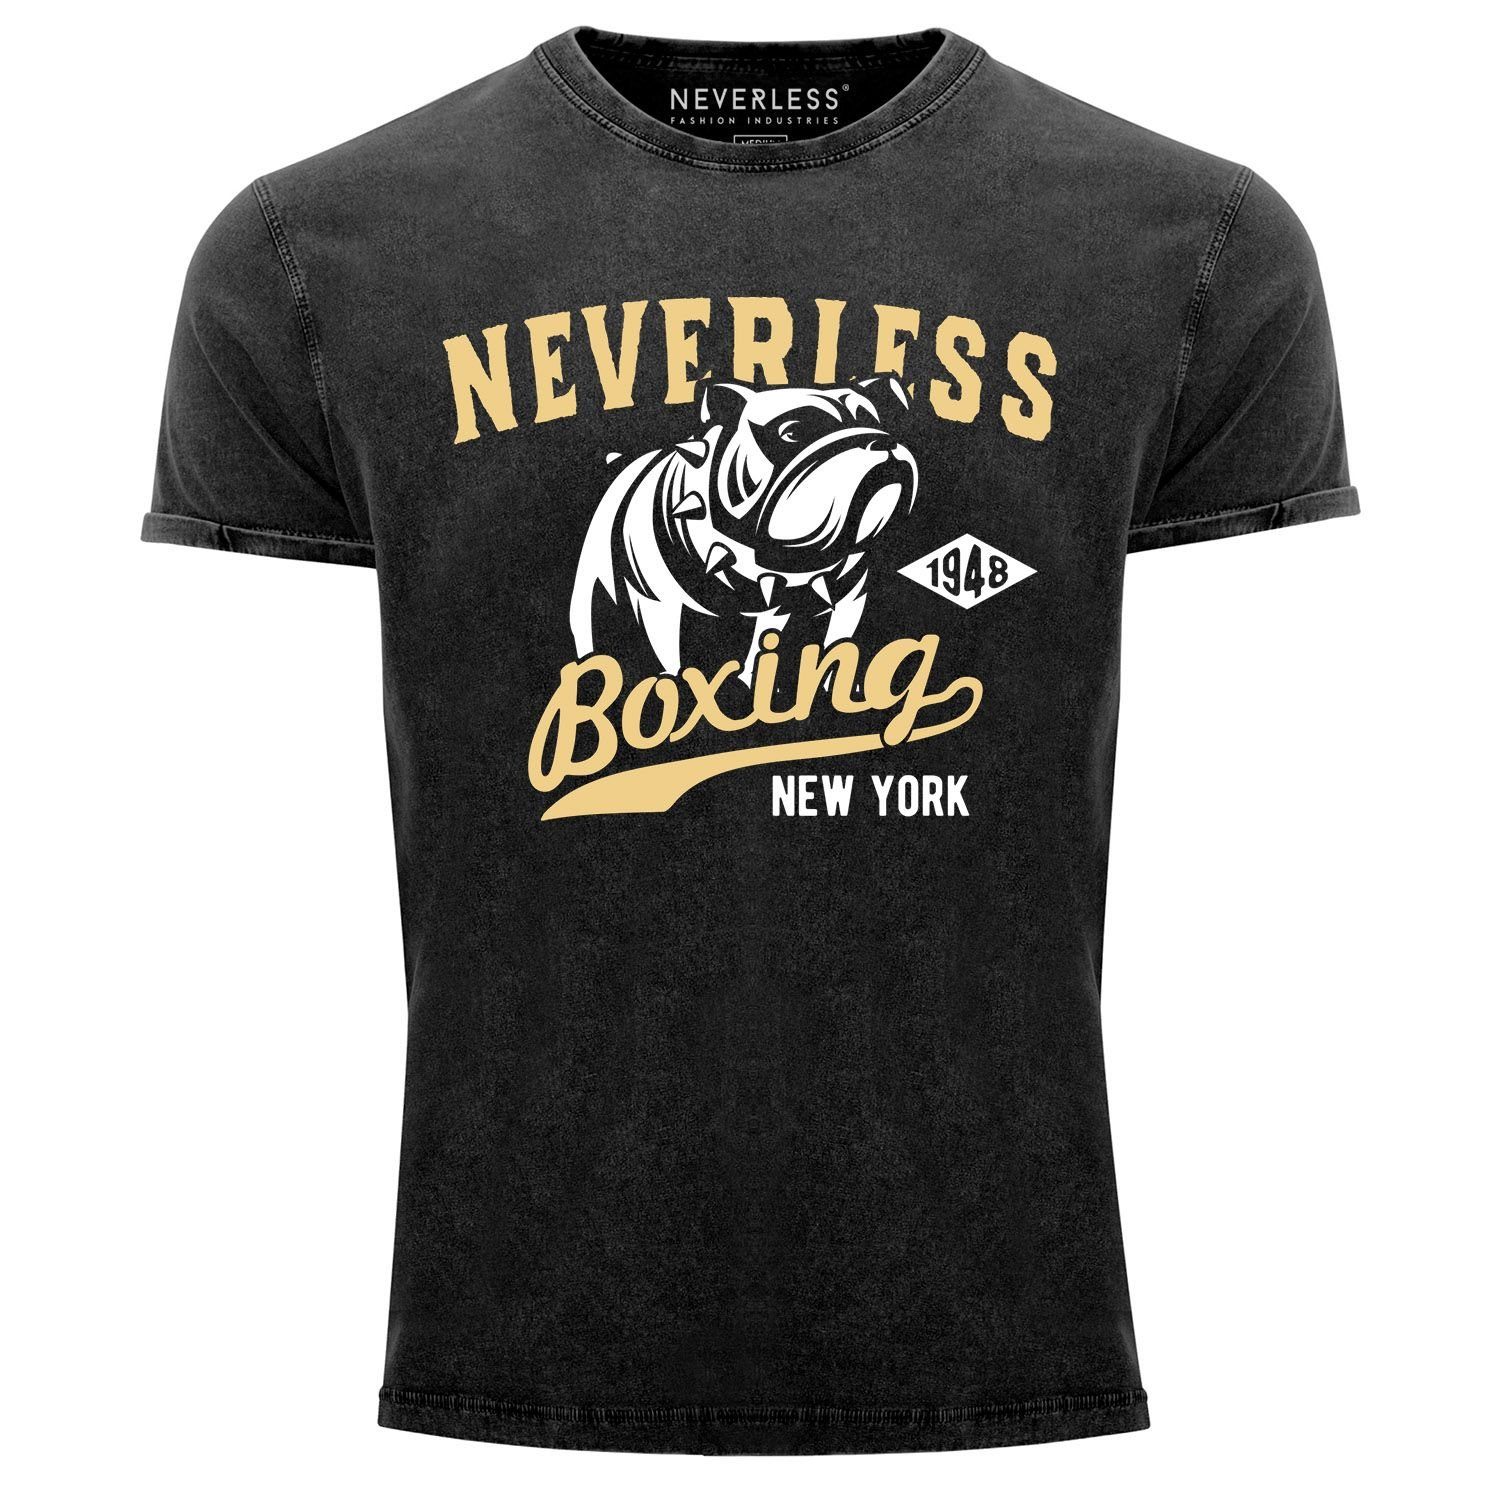 Neverless Print-Shirt Cooles Angesagtes Herren T-Shirt Vintage Shirt Boxing Boxer Sport Aufdruck Used Look Slim Fit Neverless® mit Print | T-Shirts